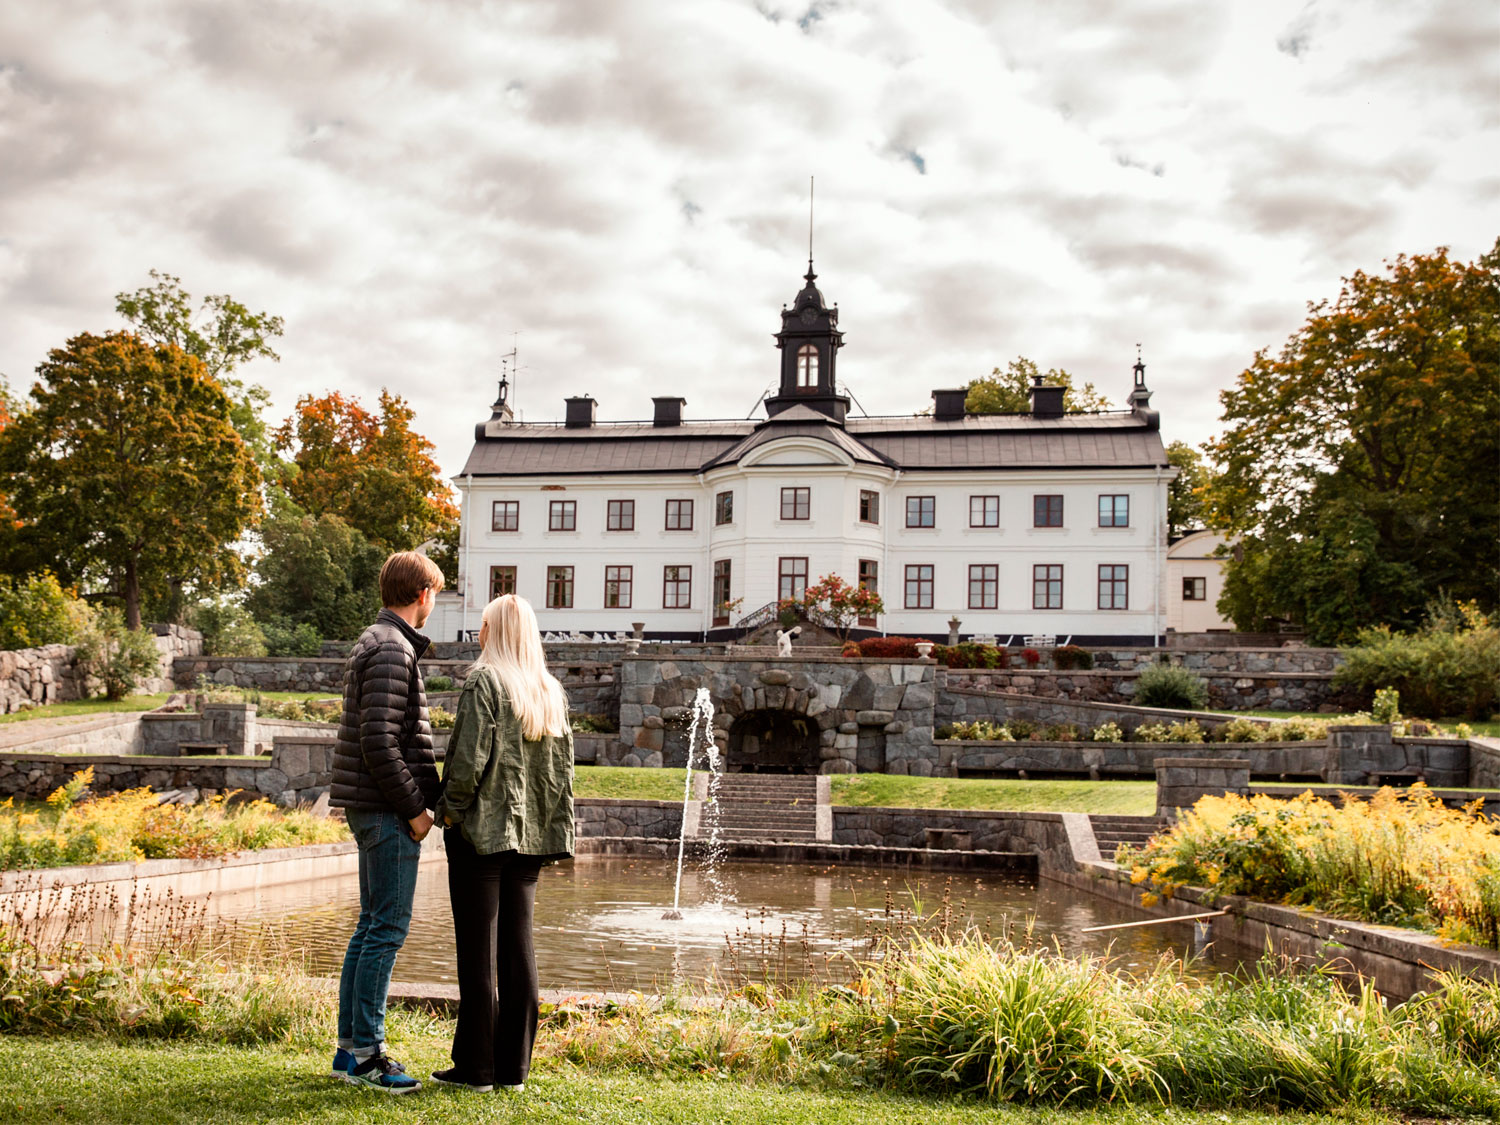 En kille och en tjej går i Kaggeholms slottspark. 